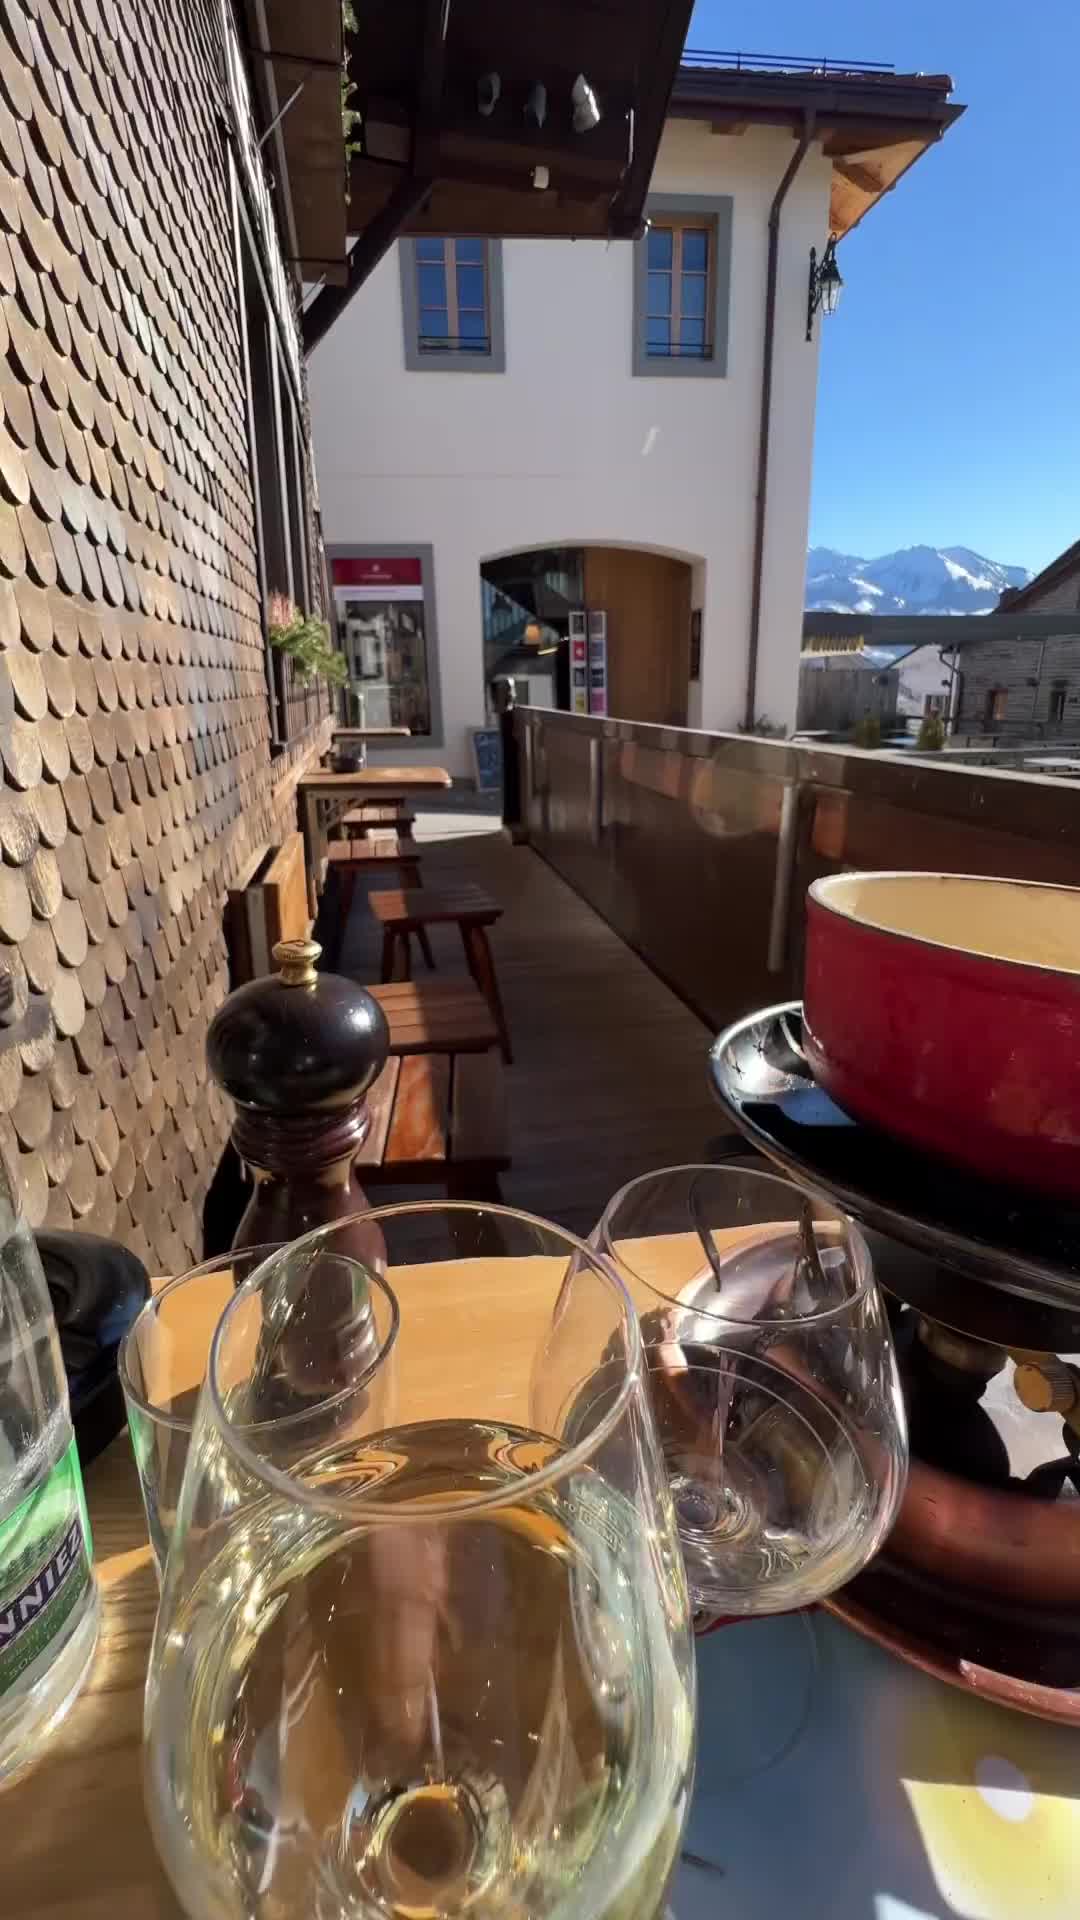 The Cheesy Life in Gruyères, Switzerland